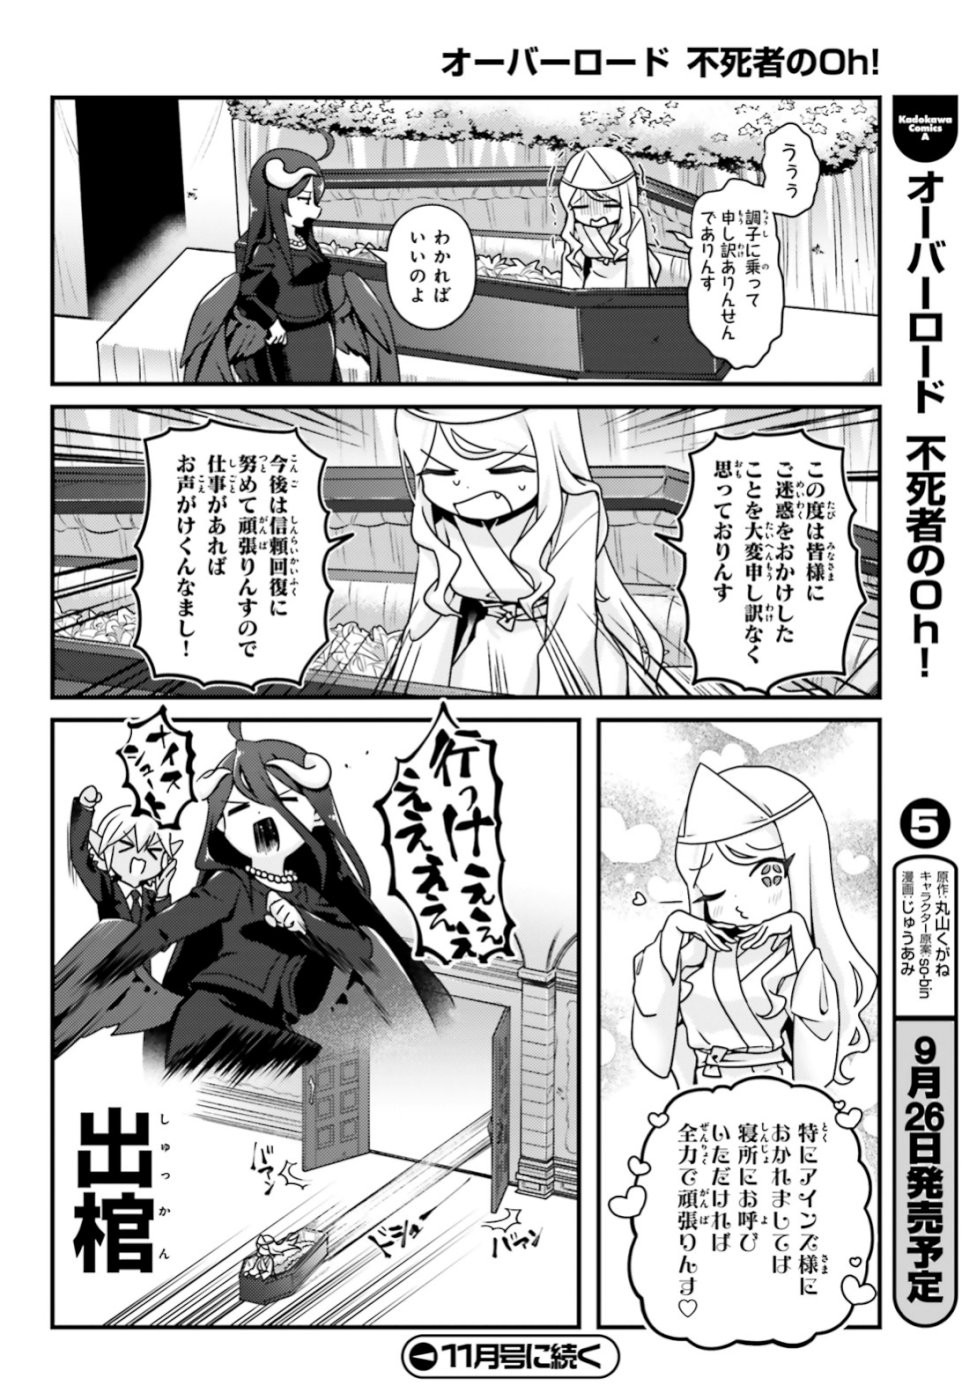 Overlord-Fushisha-no-Oh - Chapter 31 - Page 20